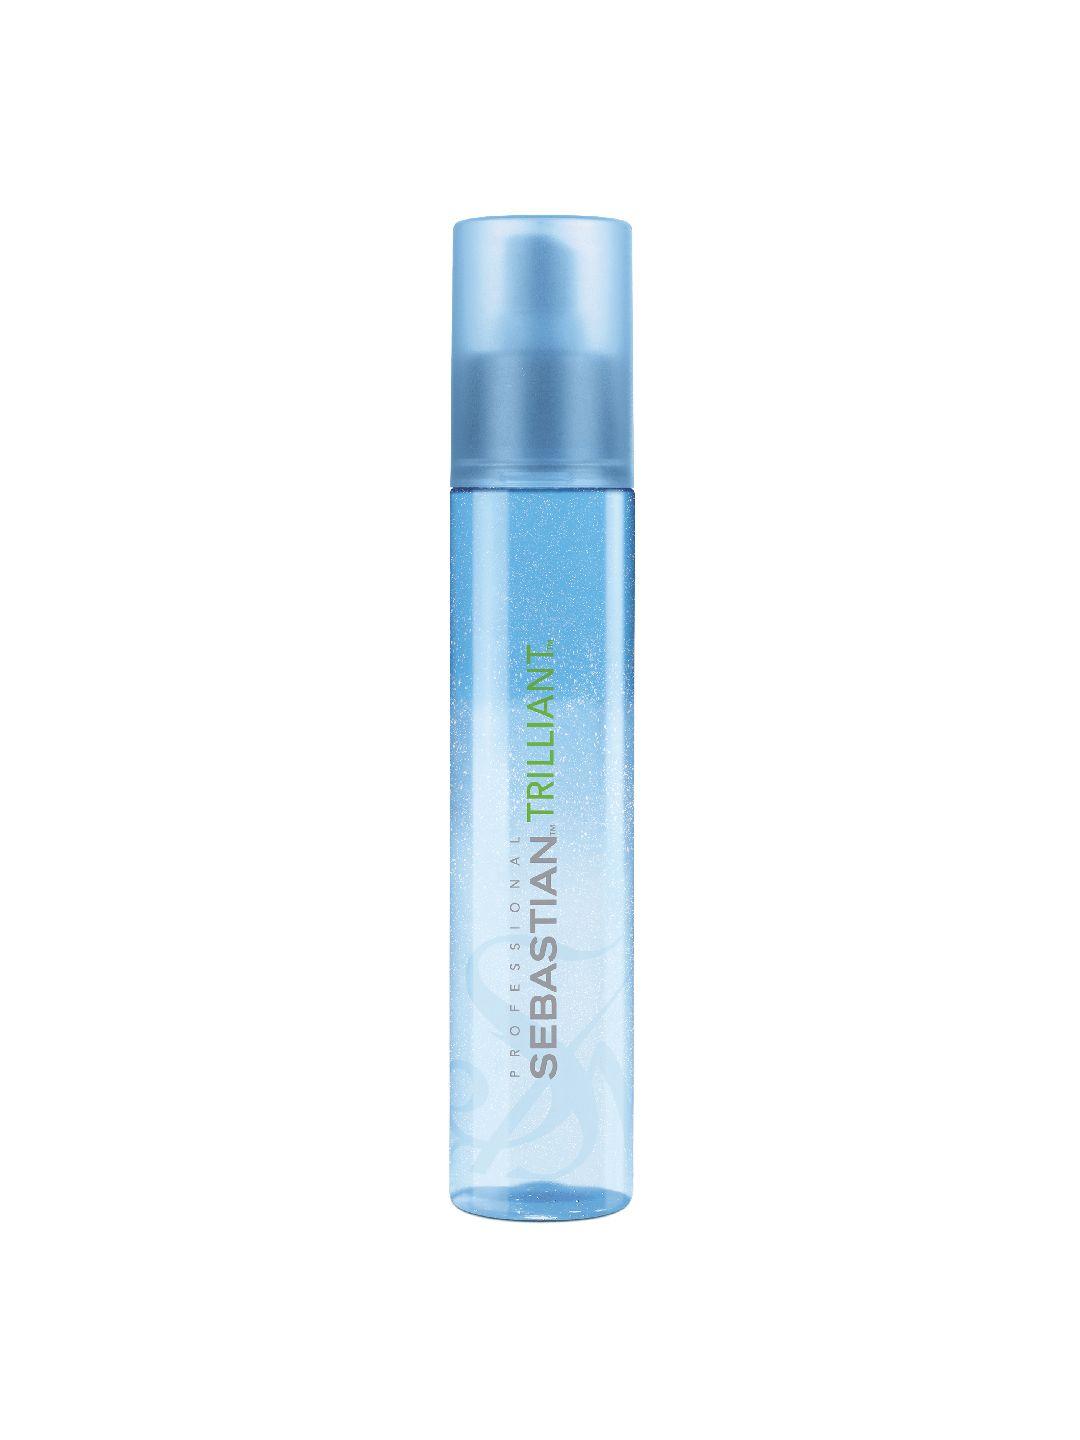 sebastian professional trilliant hair spray for thermal protection & shimmer - 150 ml